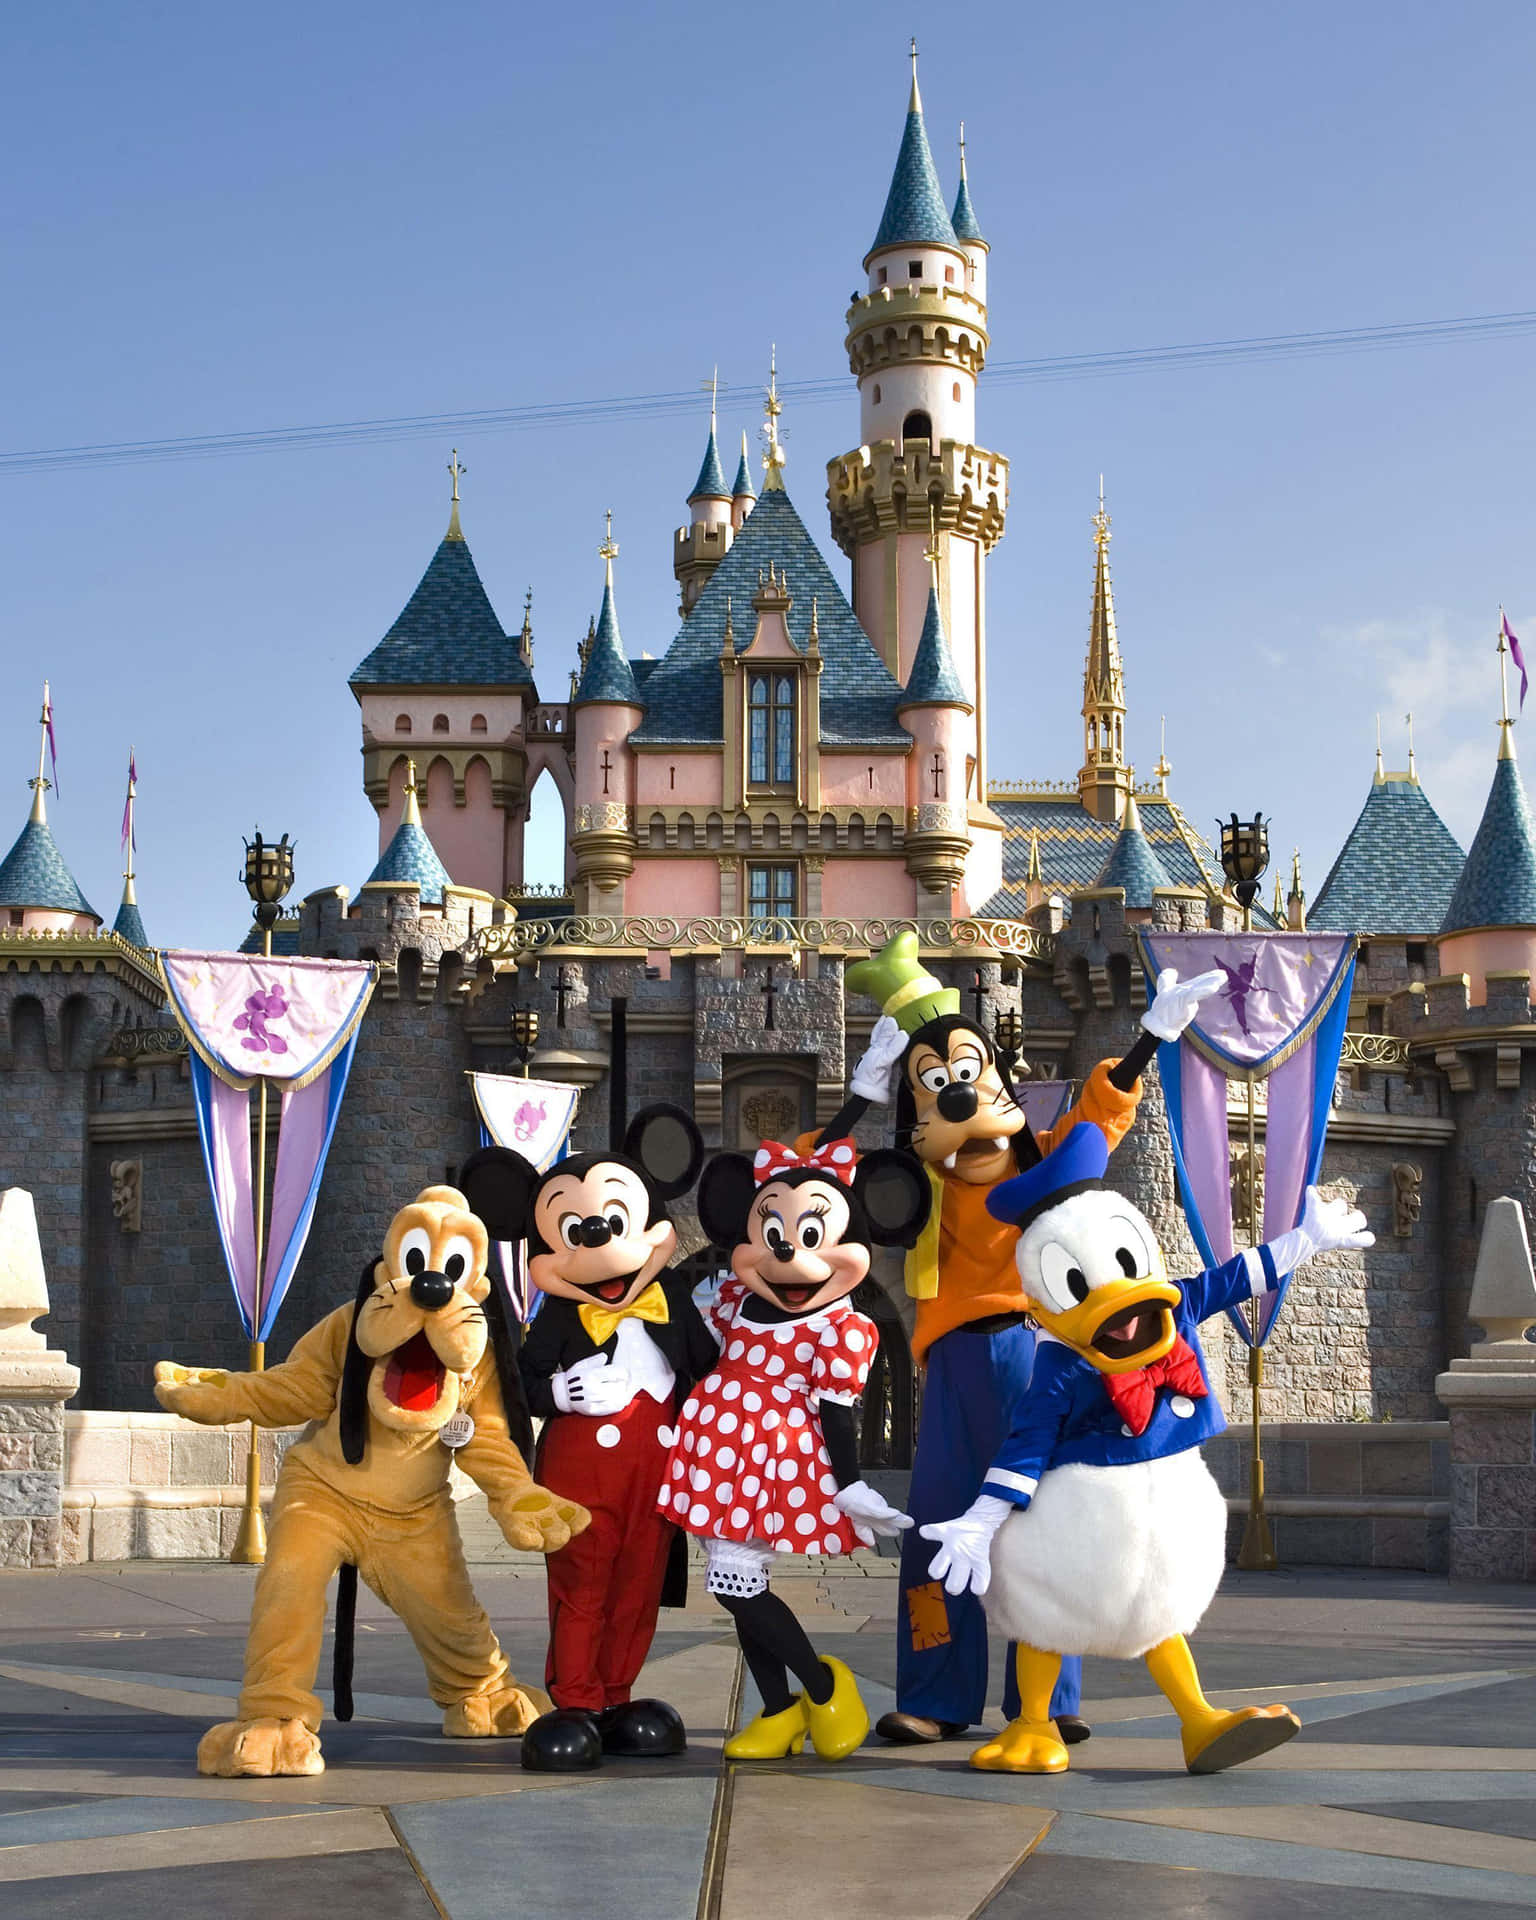 Experience the Magic of Disney at Disneyland!